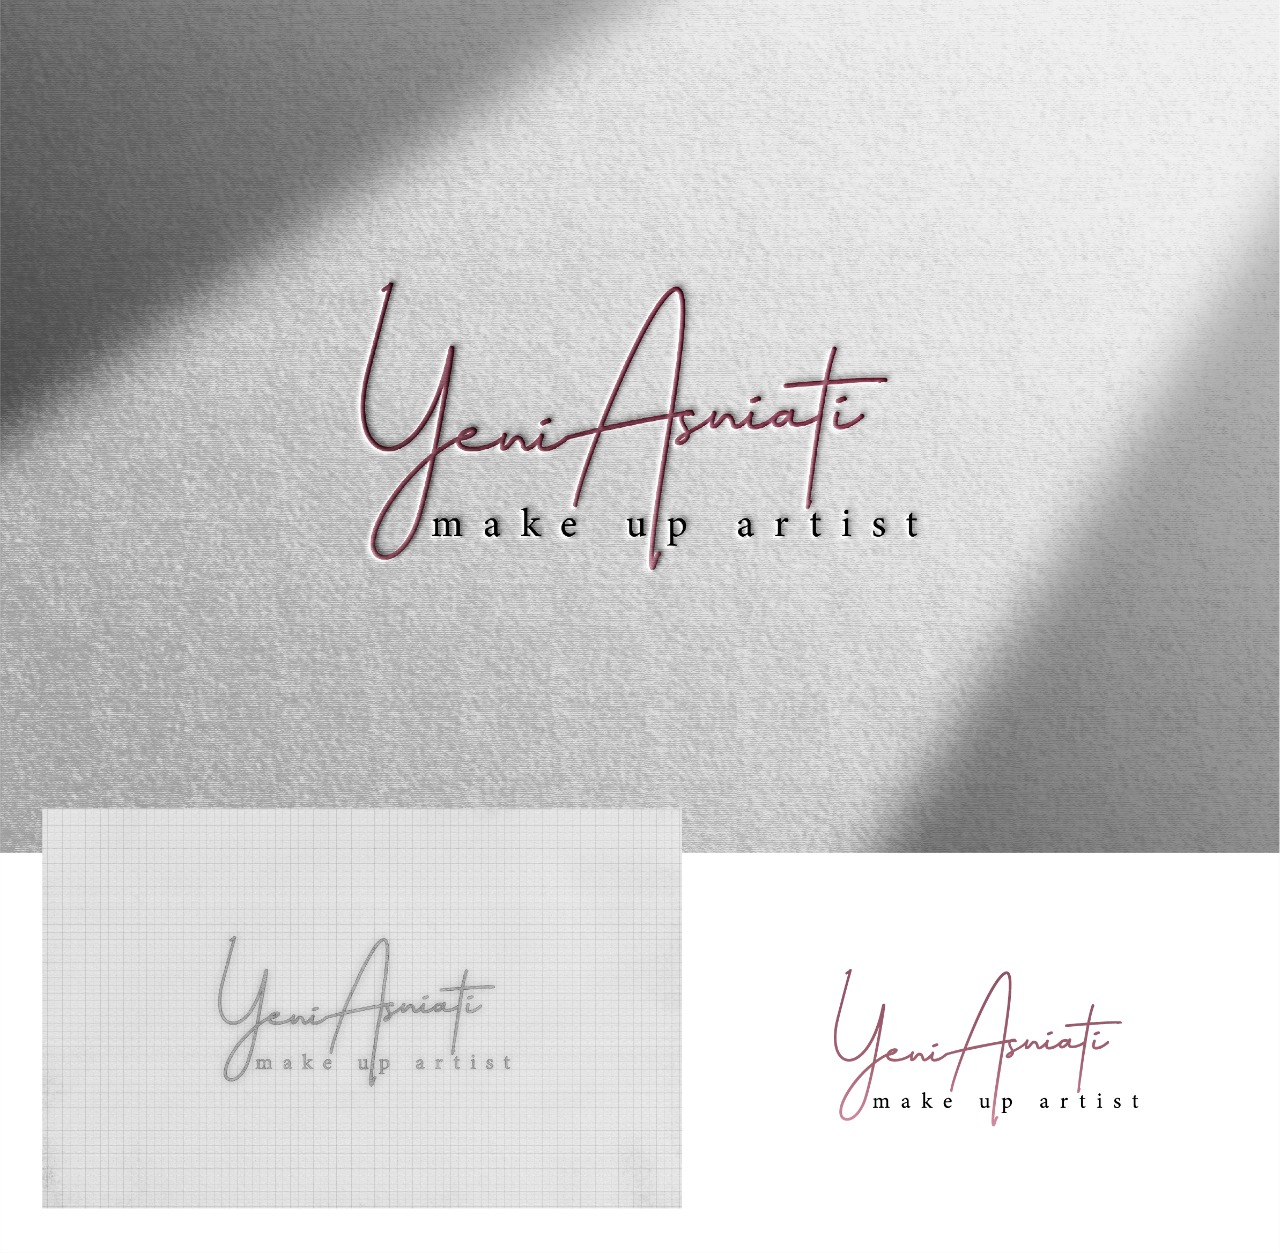 Desain Logo Make Up Artis untuk Yeni Asniati